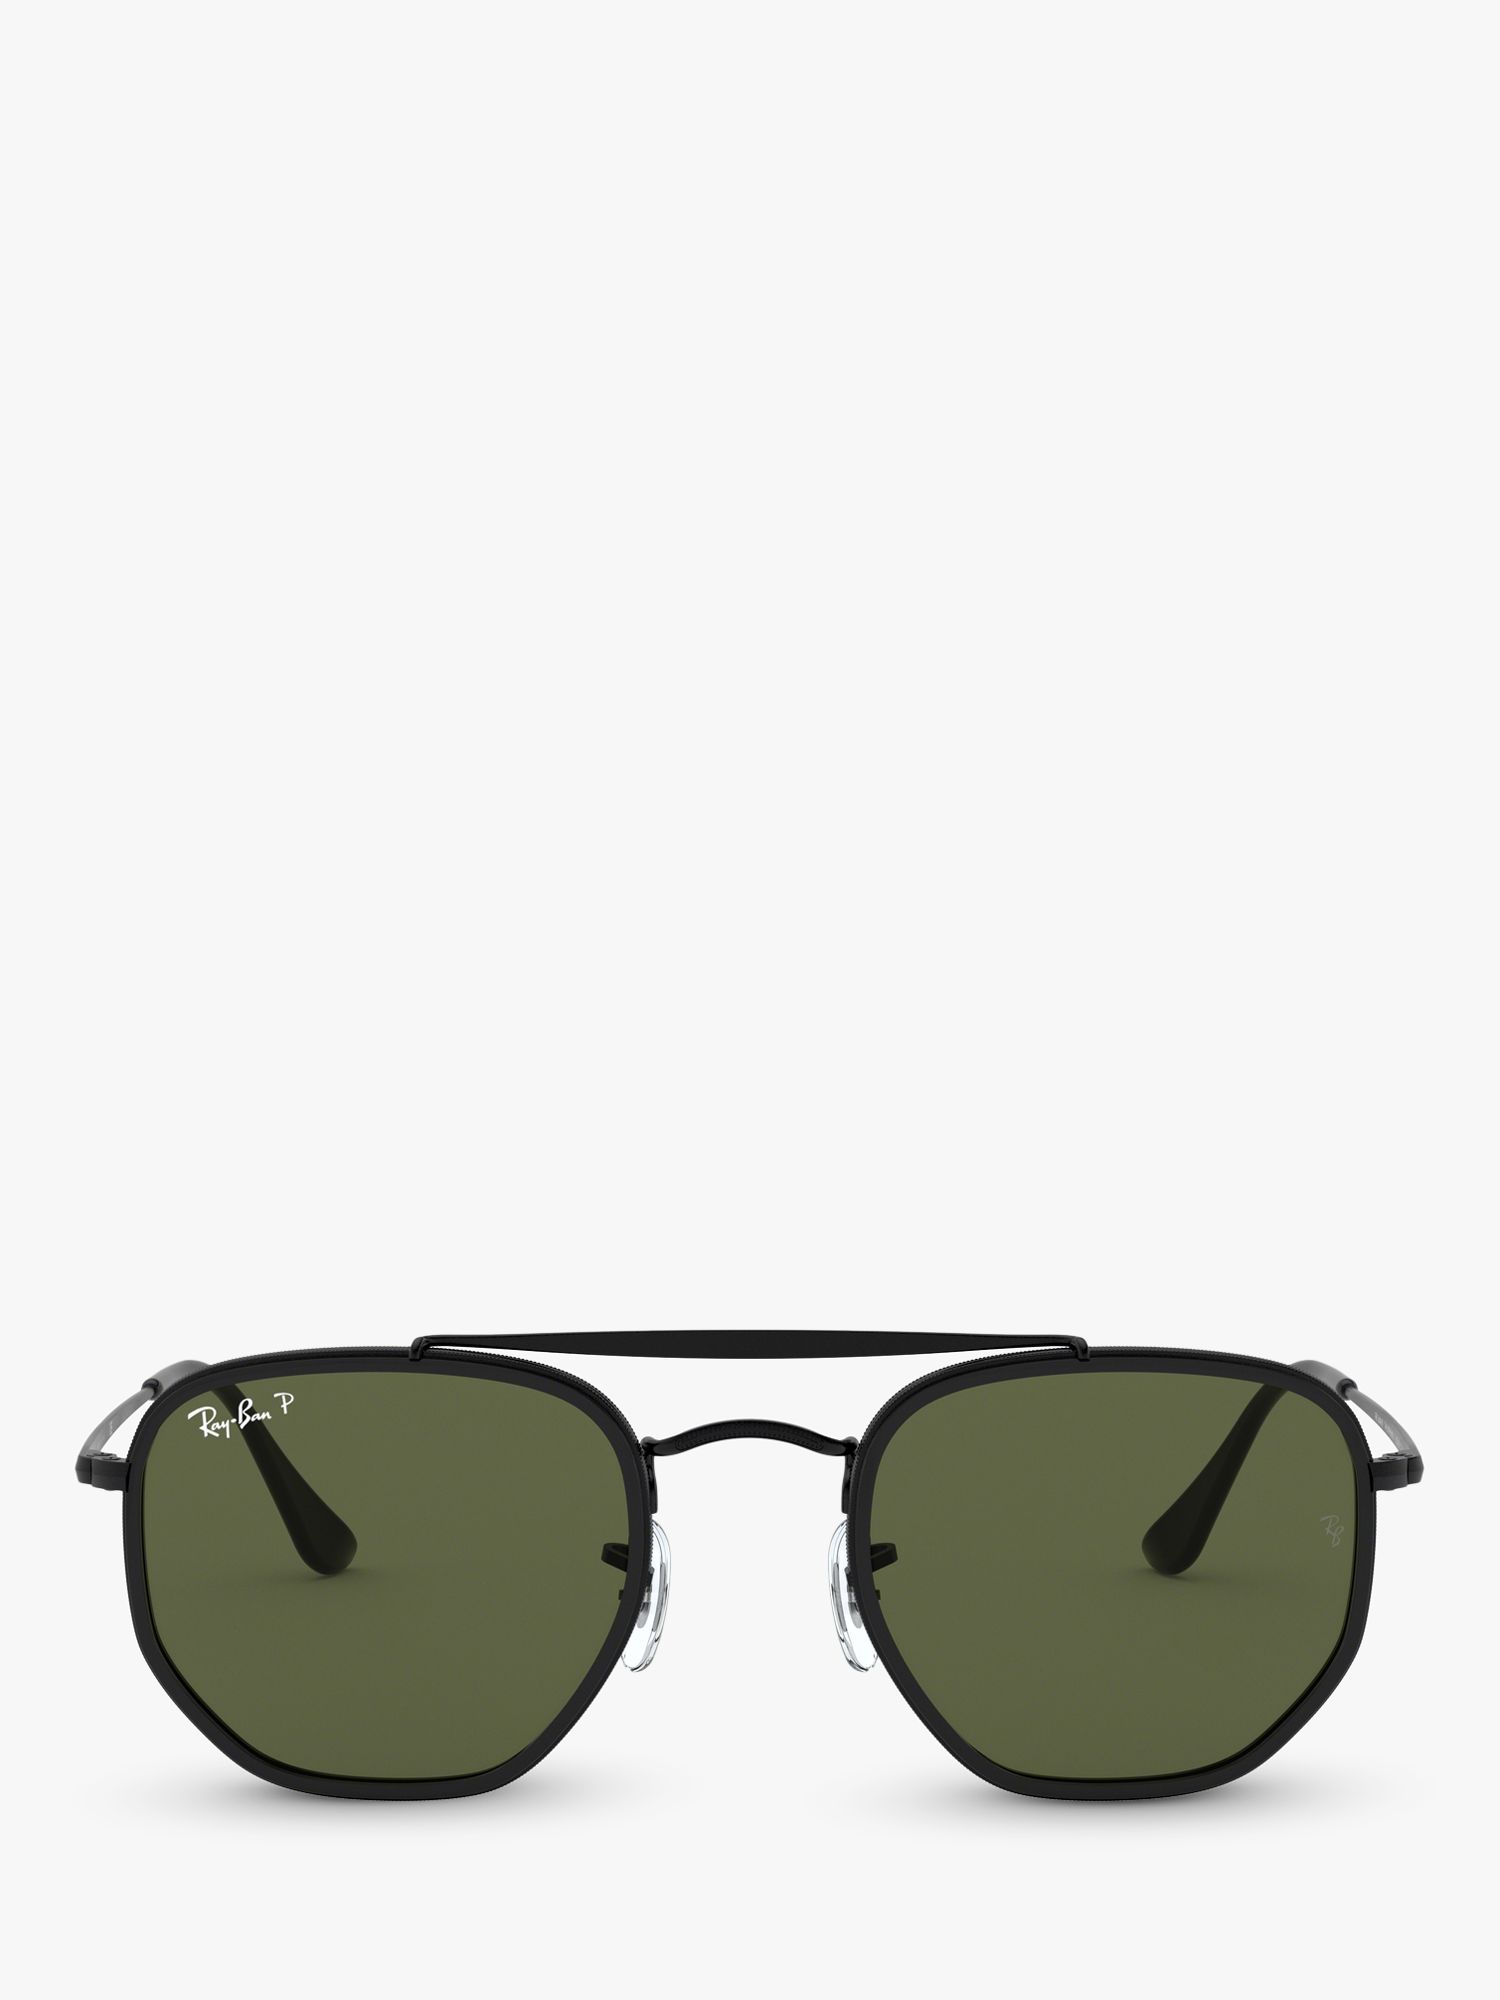 Ray-Ban RB3648M Unisex The Marshal Polarised Irregular Sunglasses, Black/Green  at John Lewis & Partners